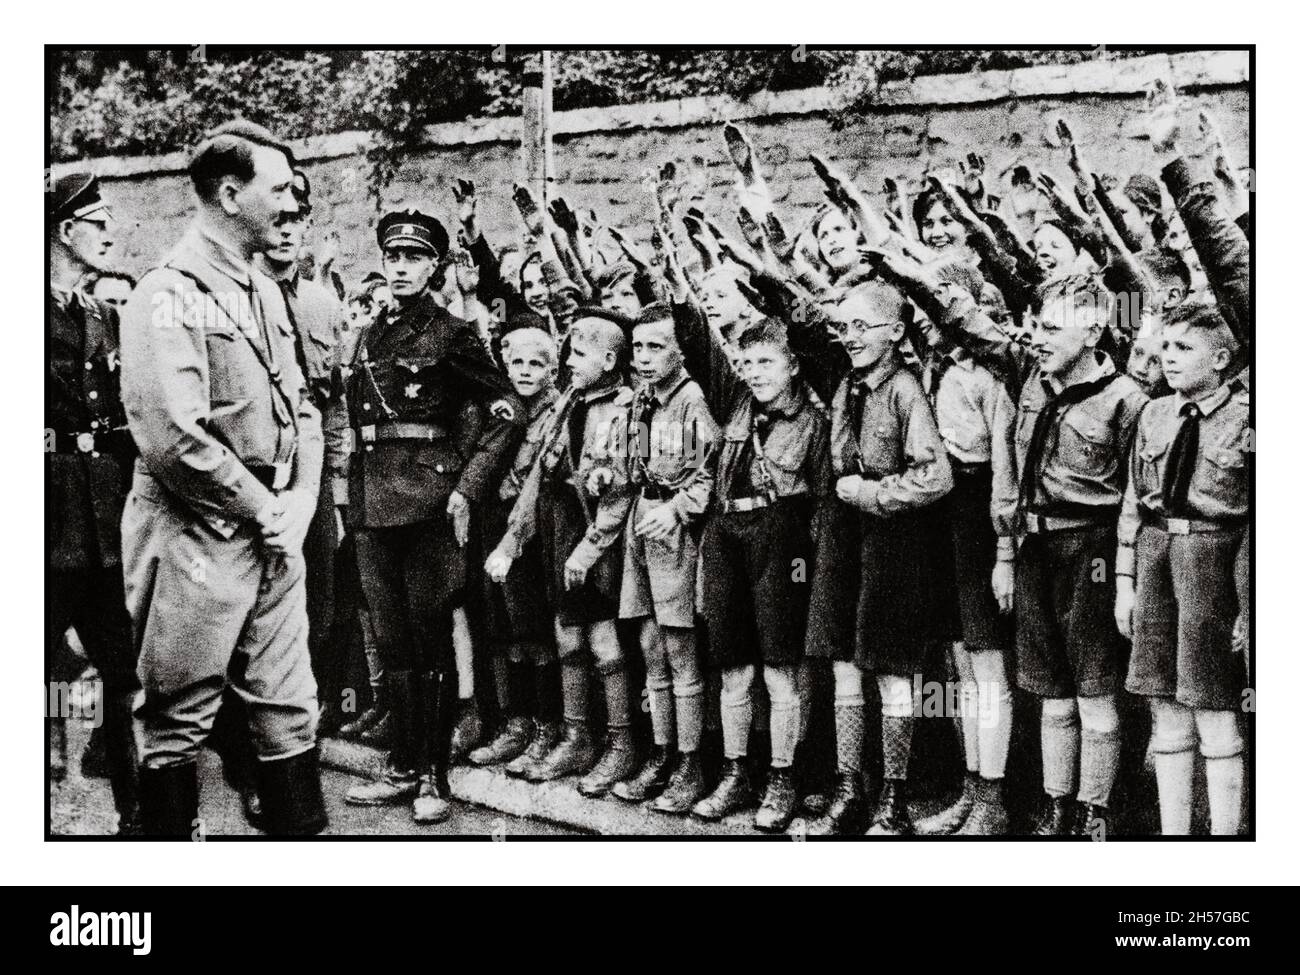 HITLER YOUTH HEIL HITLER  Nazi Propaganda image of Adolf Hitler with impressionable young 8-12 years Hitlerjugend Hitler Youth boys saluting Adolf Hitler in Leipzig, Nazi Germany 1932 Stock Photo